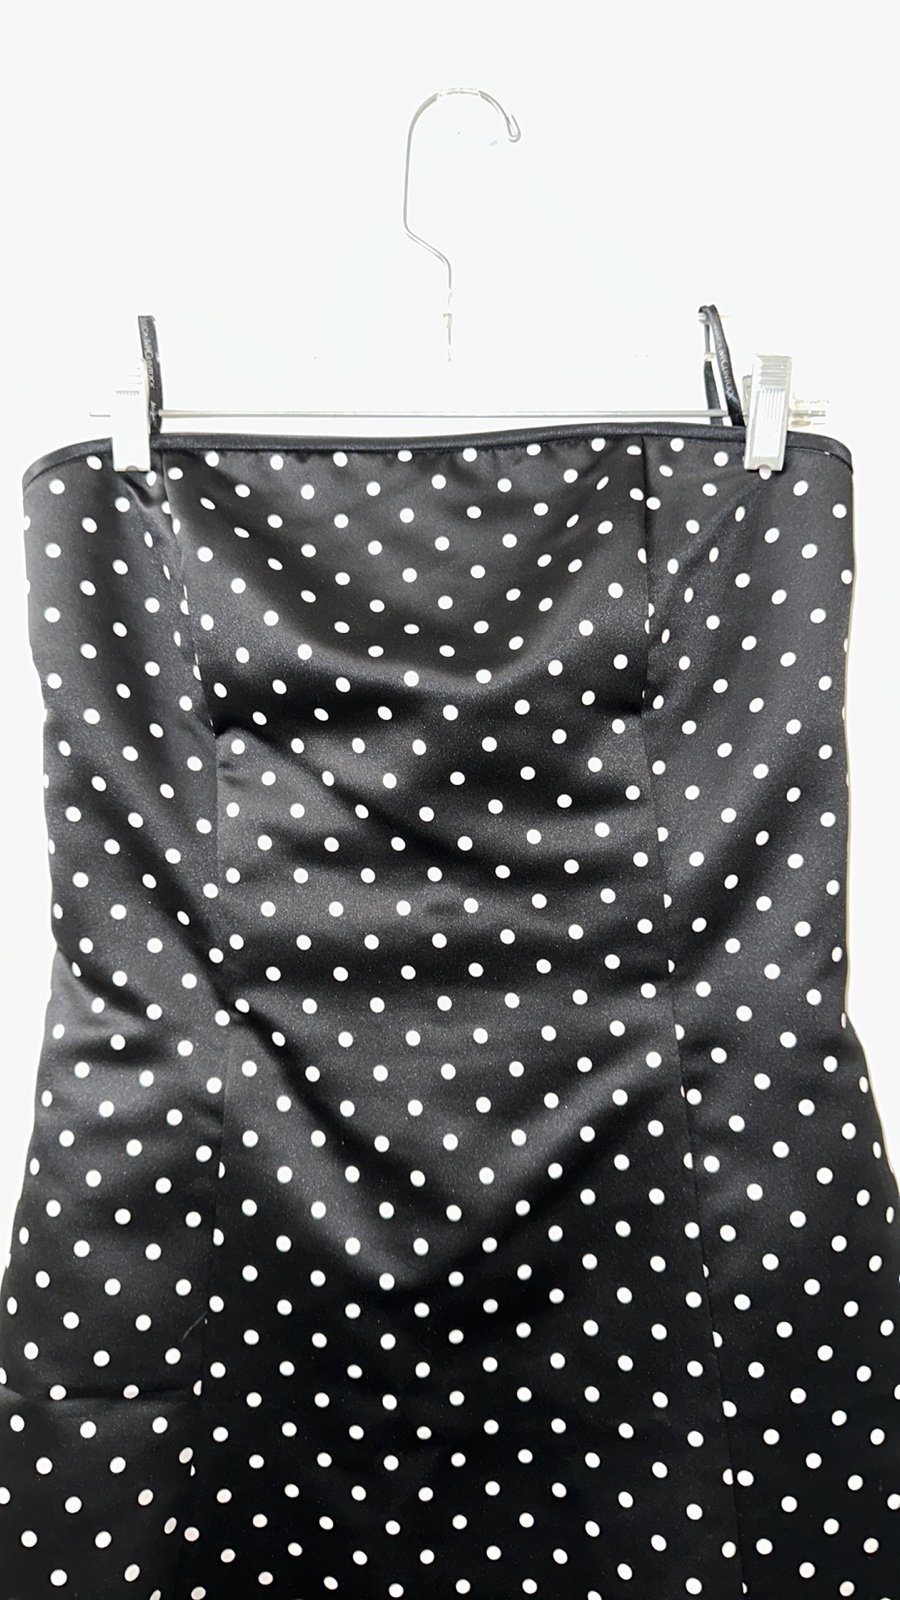 High quality Jessica McClintock Strapless Black Satin Dress 11/12 Polka Dot Retro Rockabilly m5CkitKjo Outlet Store